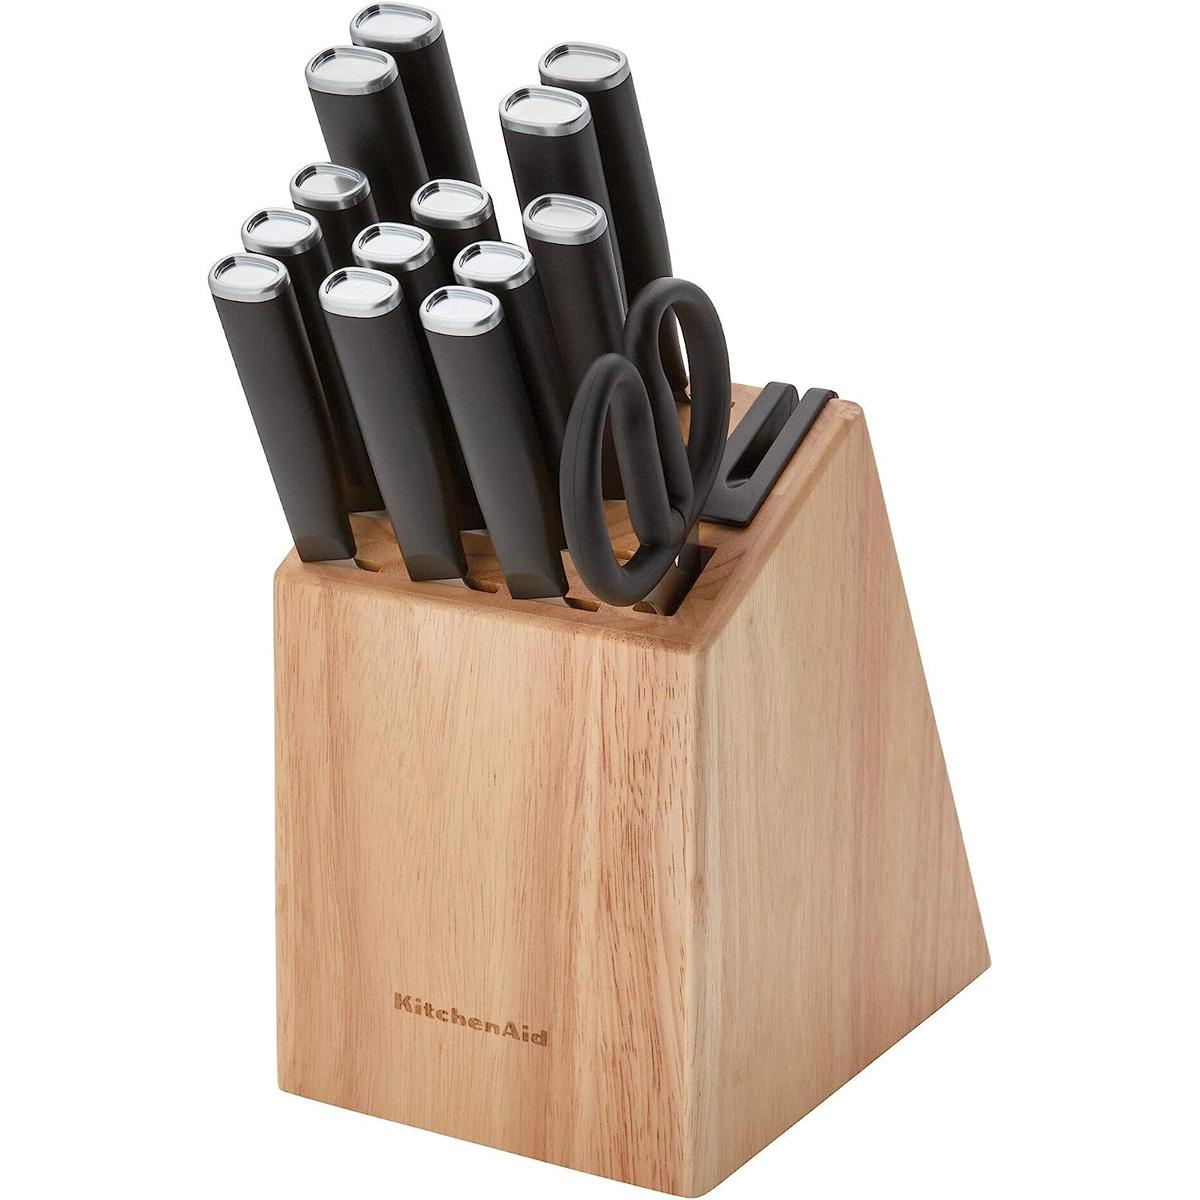 KitchenAid Classic 15 Piece Knife Block Set for $39.99 Shipped